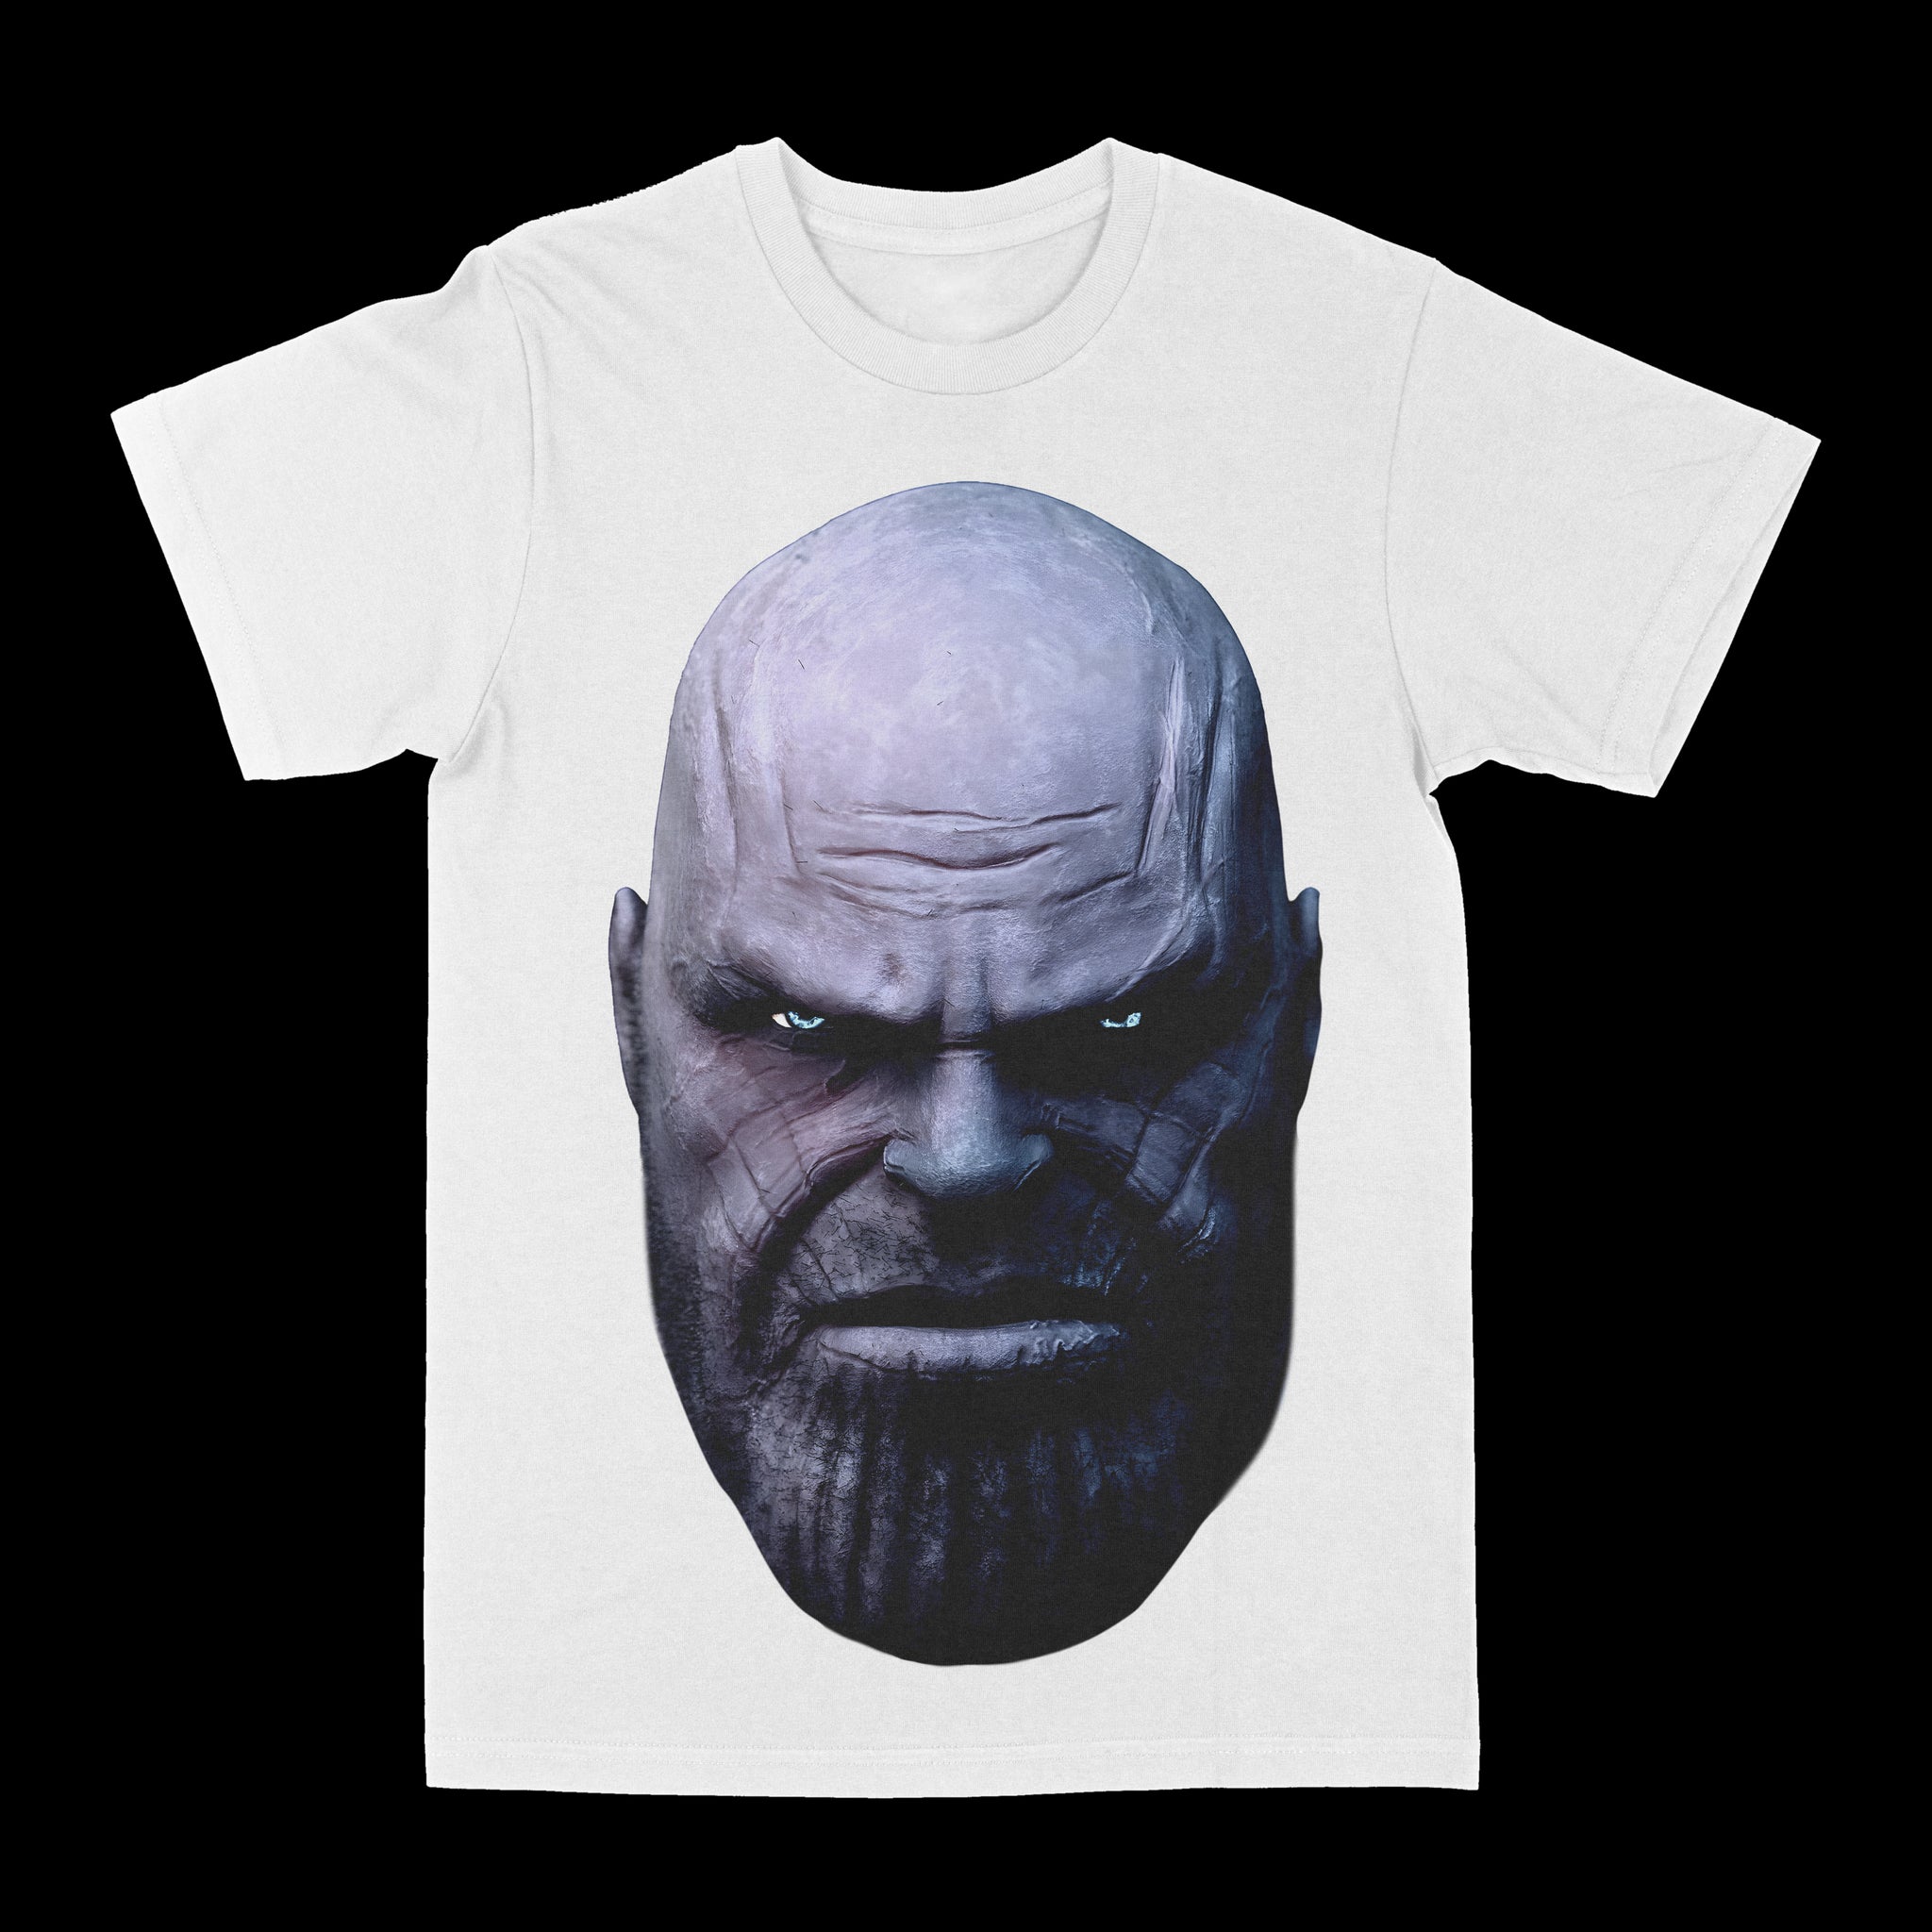 Thanos "Big Face" Graphic Tee